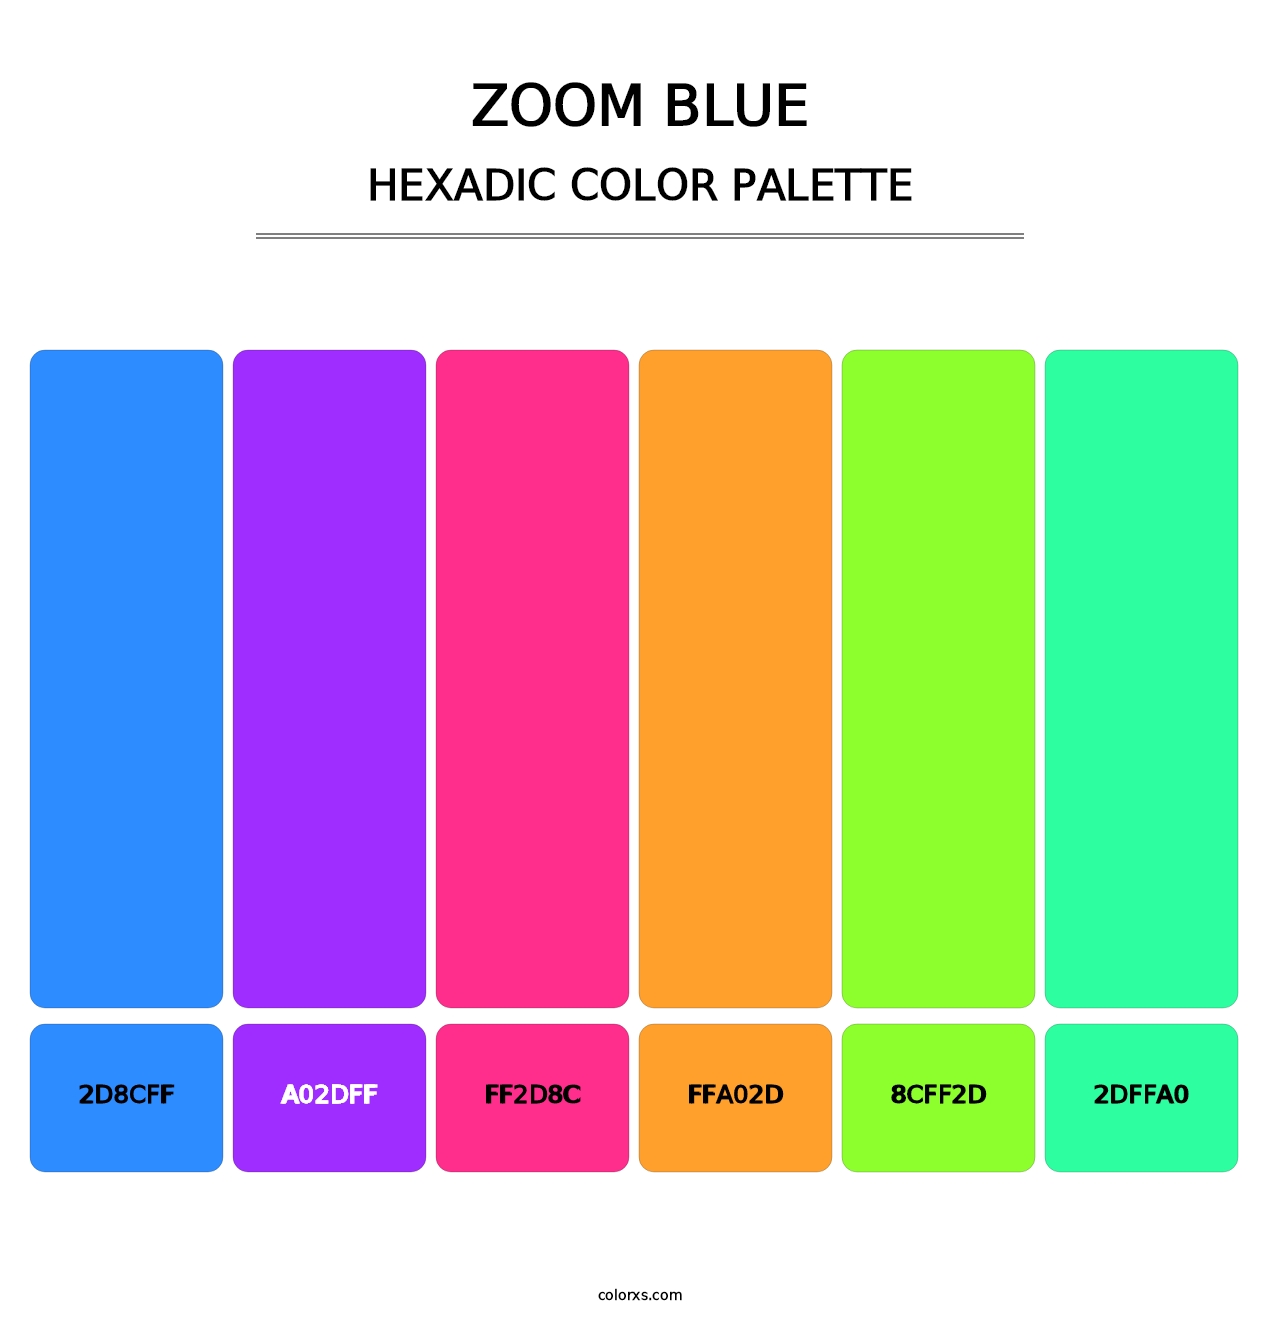 Zoom Blue - Hexadic Color Palette